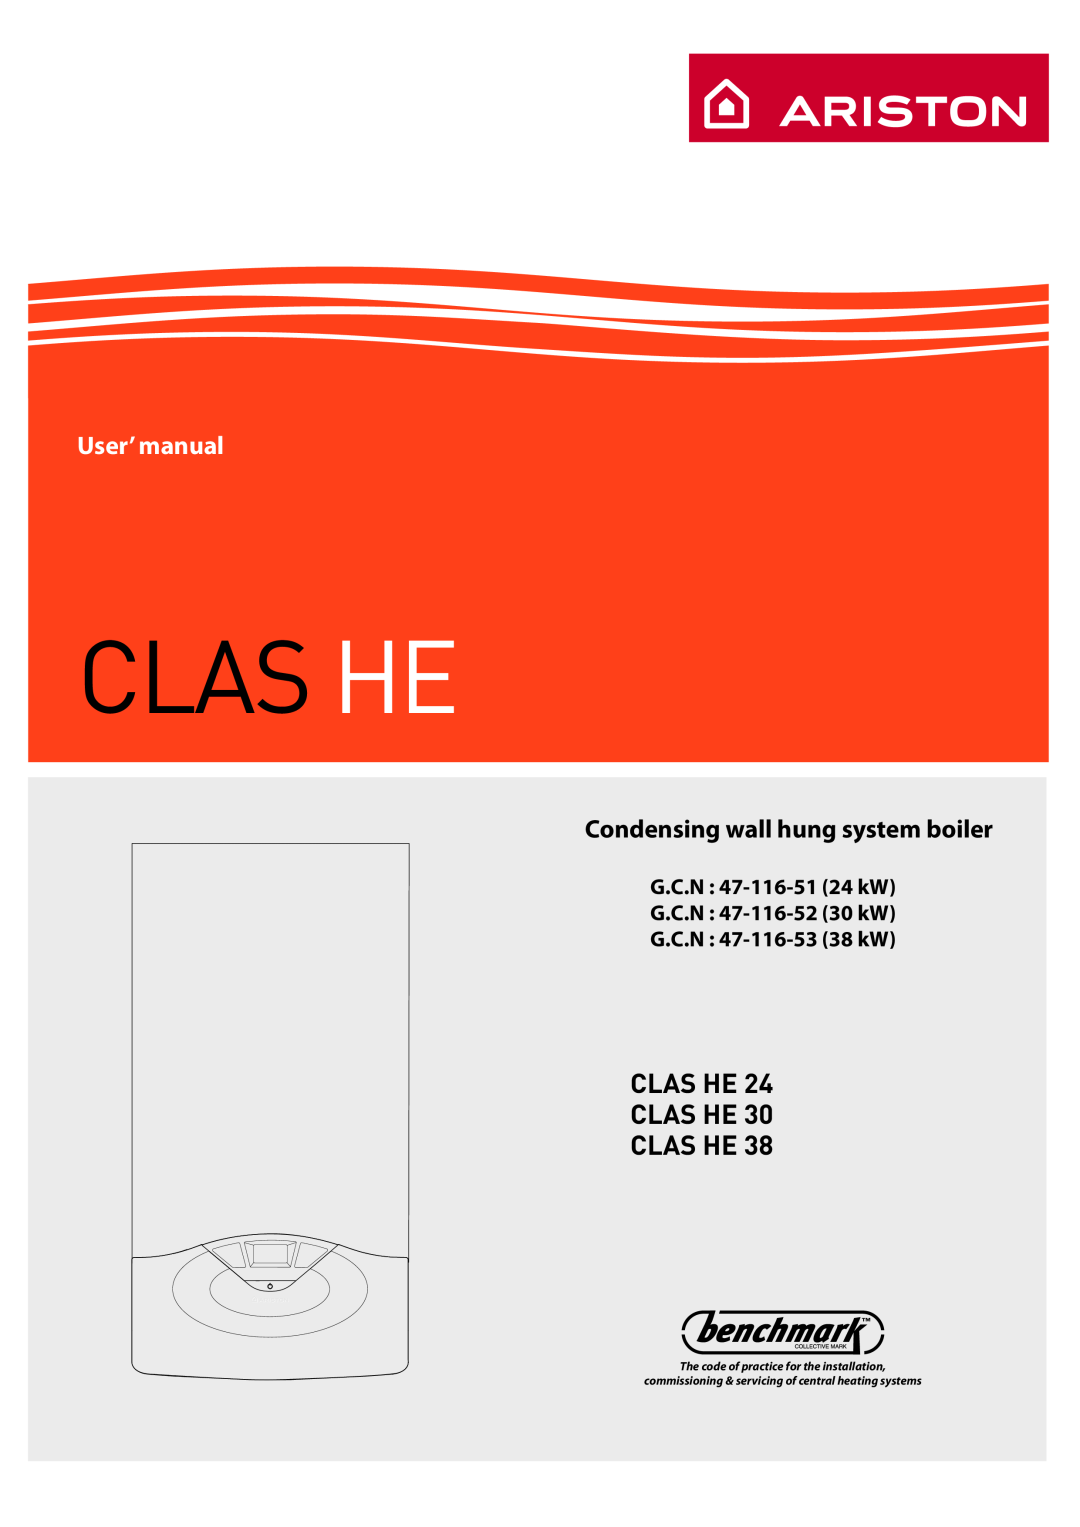 Ariston 47-116-53, 47-116-51 user manual Clas He Clas He Clas He, User’ manual, Condensing wall hung system boiler 